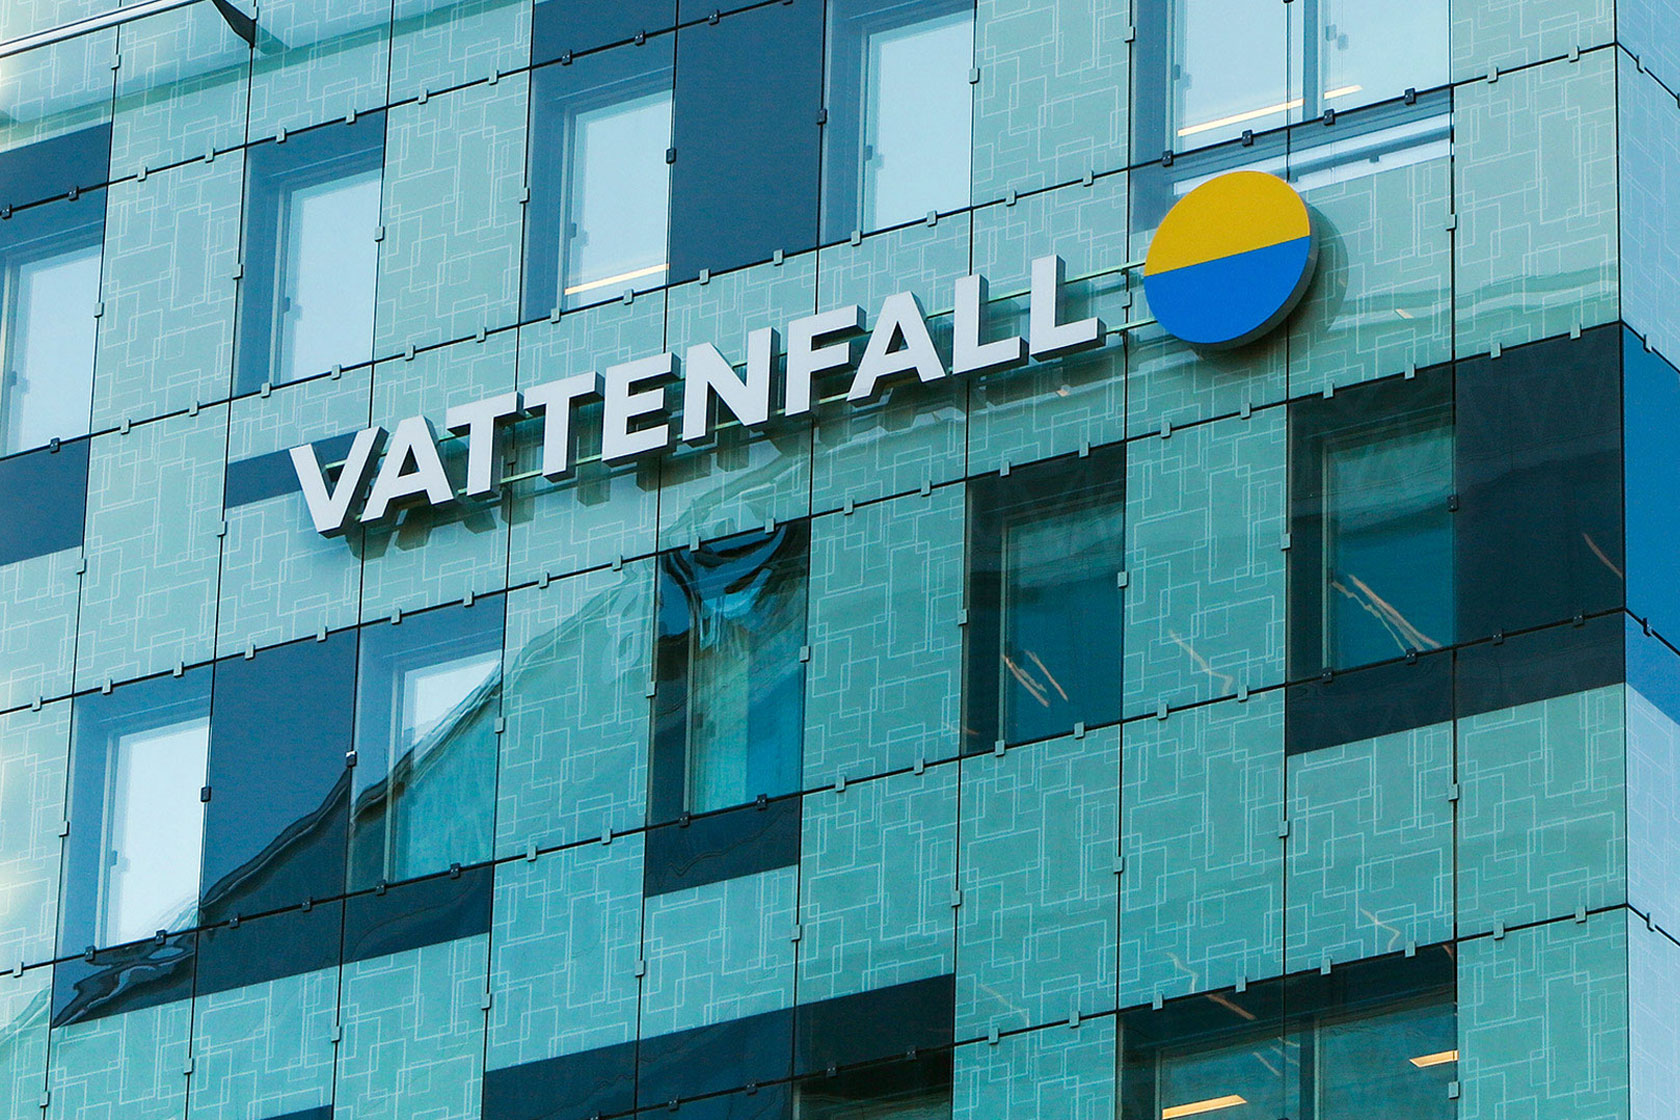 Vattenfall headquarters in Solna, Sweden